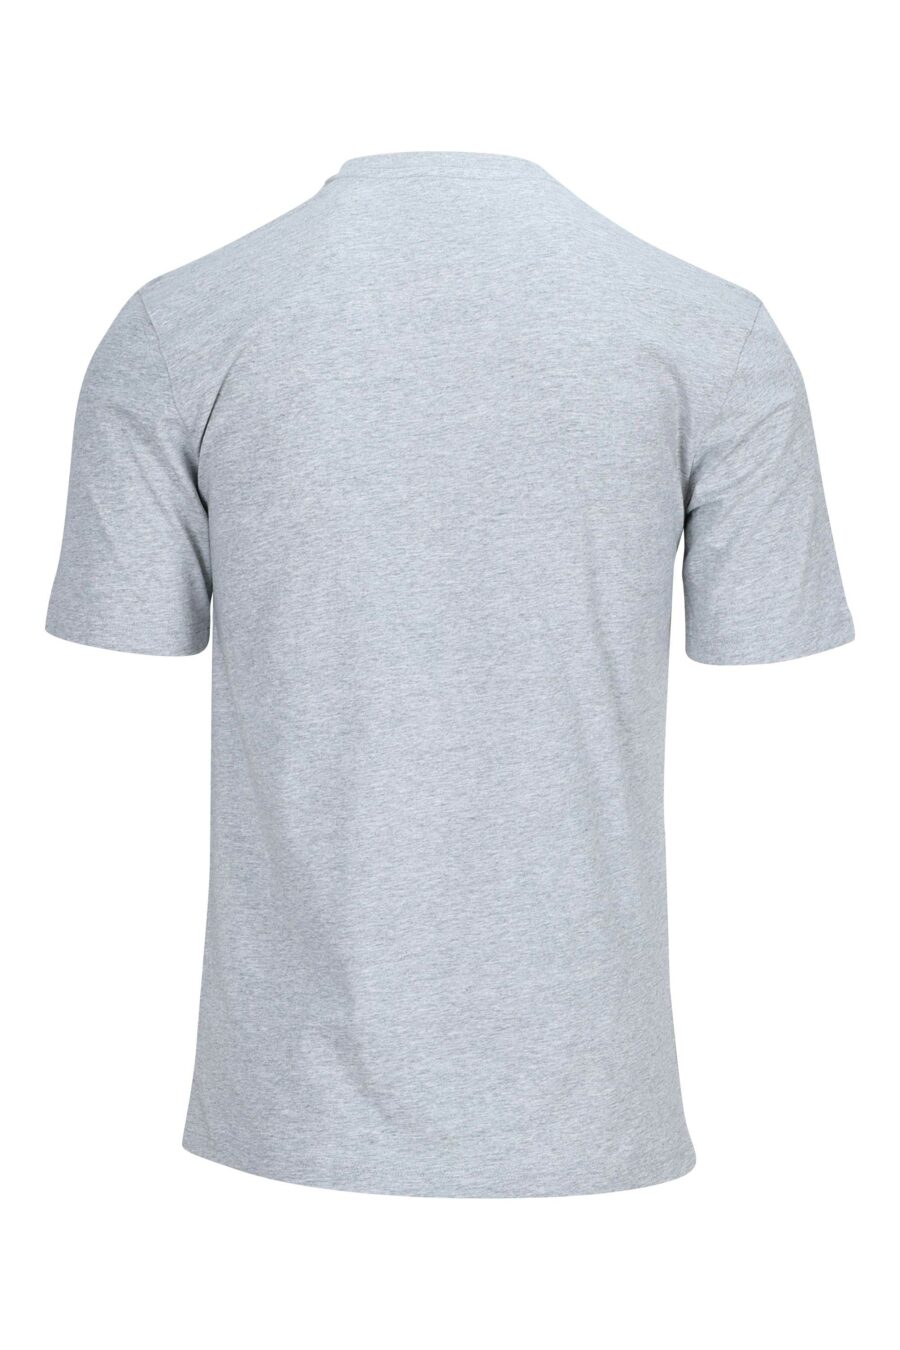 Grey T-shirt with black belt maxilogo - 889316938029 1